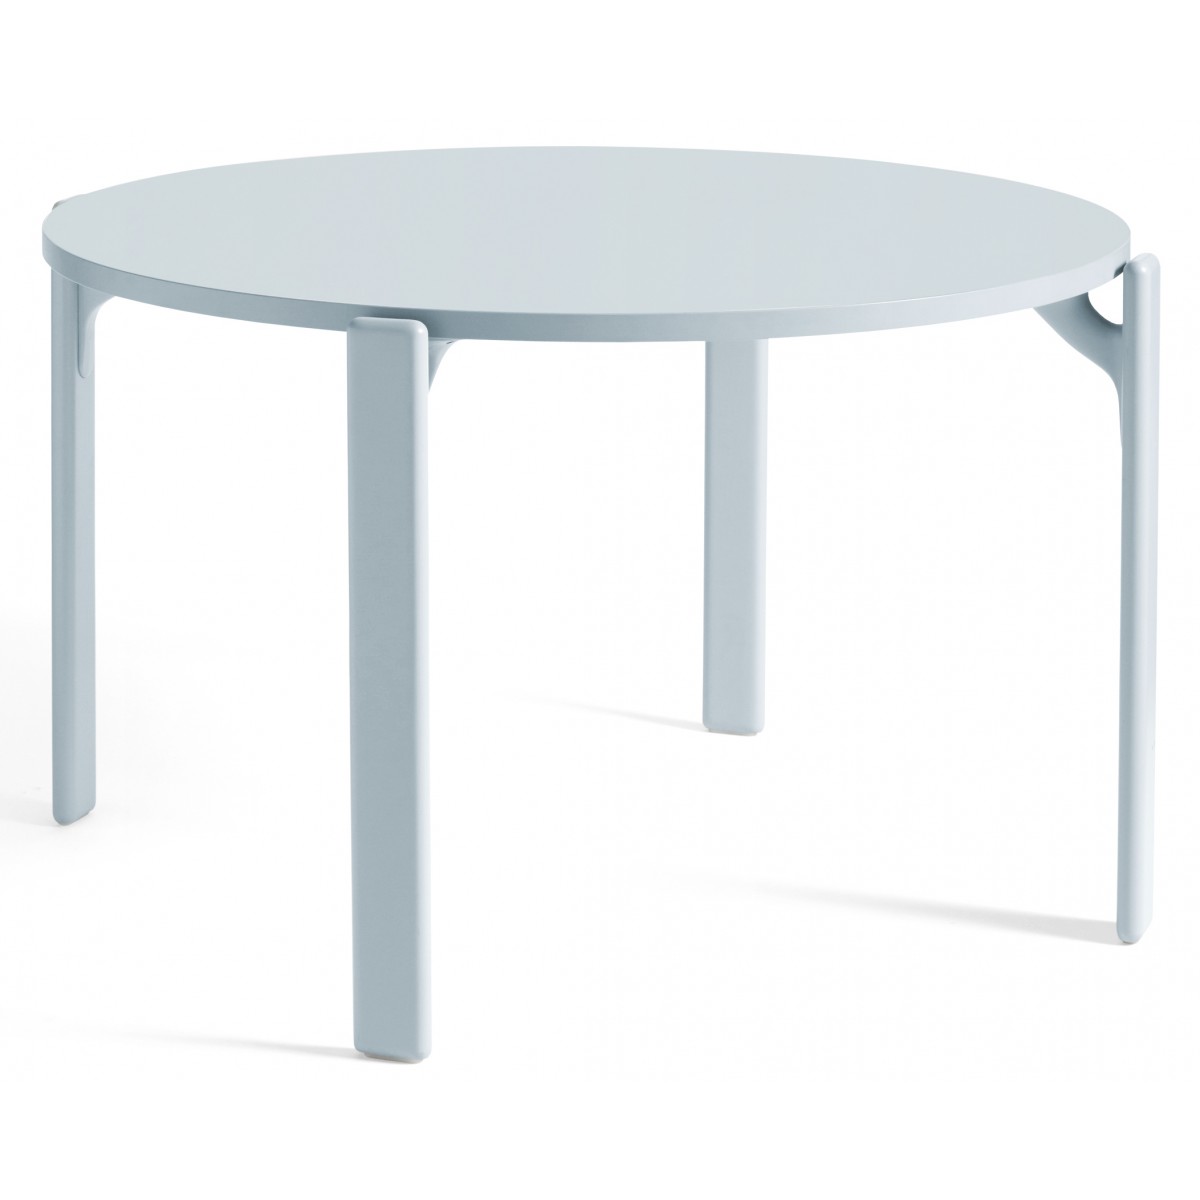 Slate blue, Gull laminate - REY table